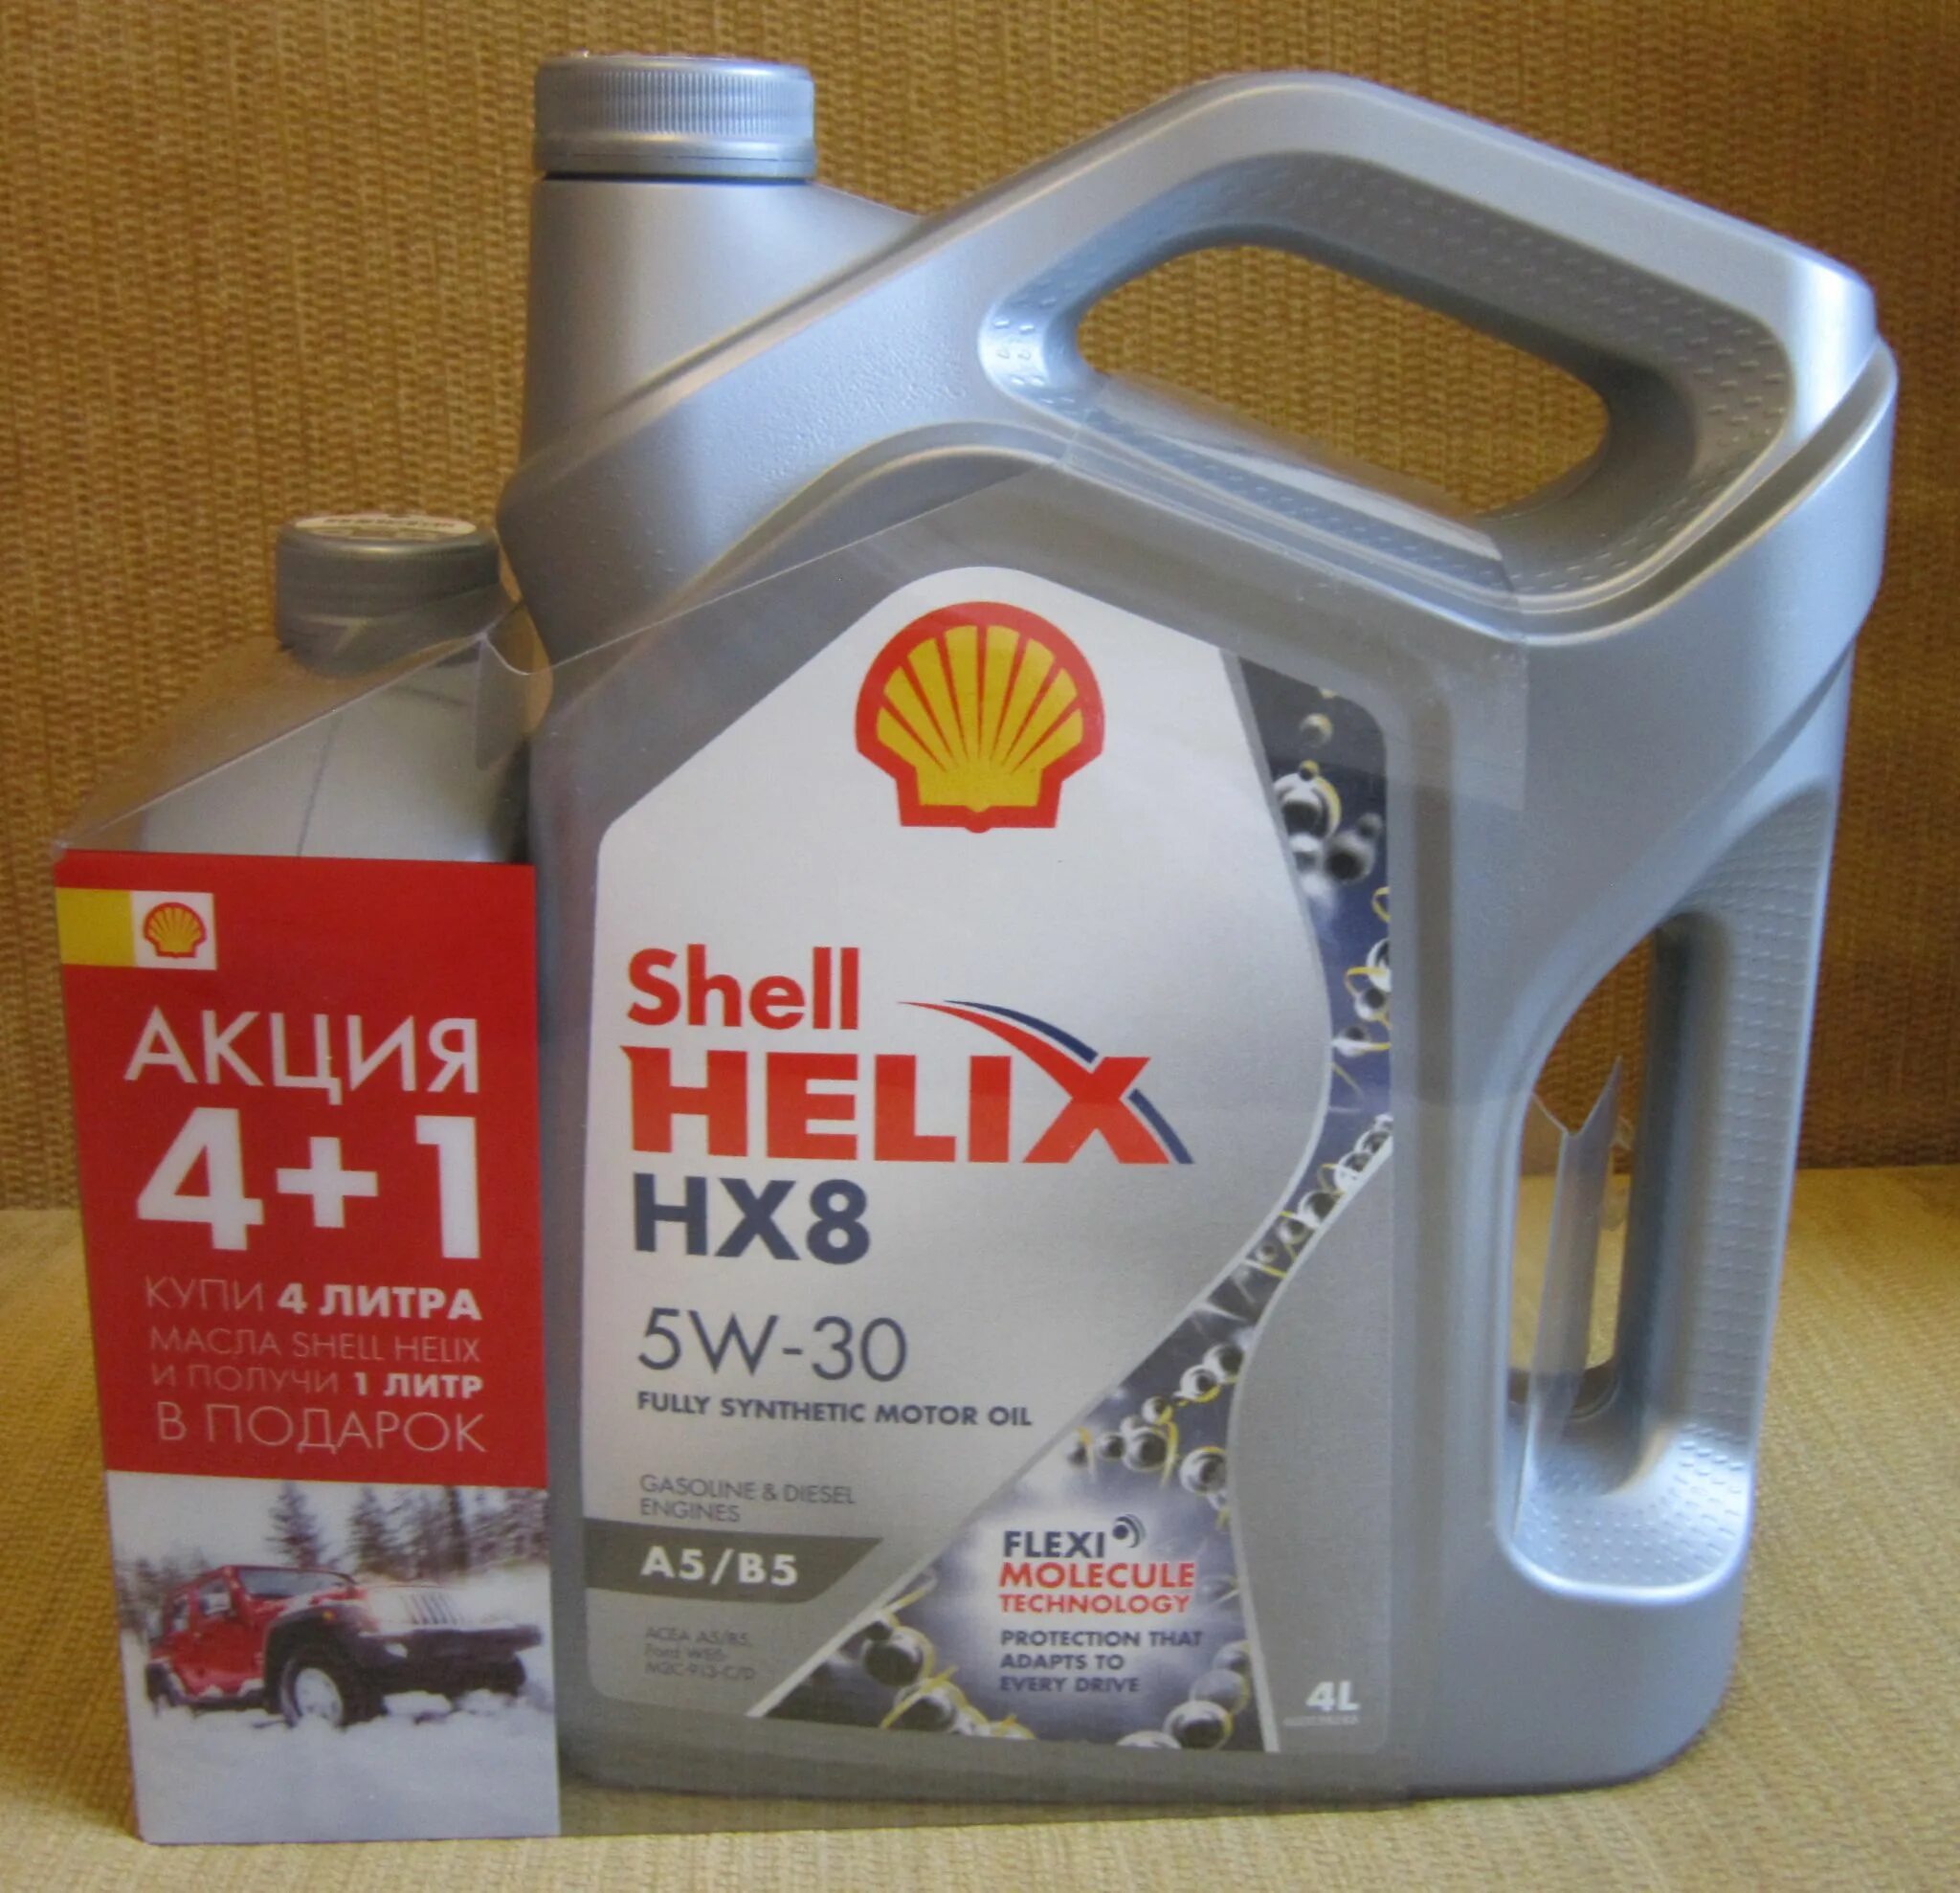 Shell hx8 5w30. Shell hx8 5w30 a5/b5. Моторное масло синтетическое Shell Helix hx8 a5/b5 5w-30. Моторное масло Shell Helix hx8 a5/b5 5w-30 синтетическое 4 л.